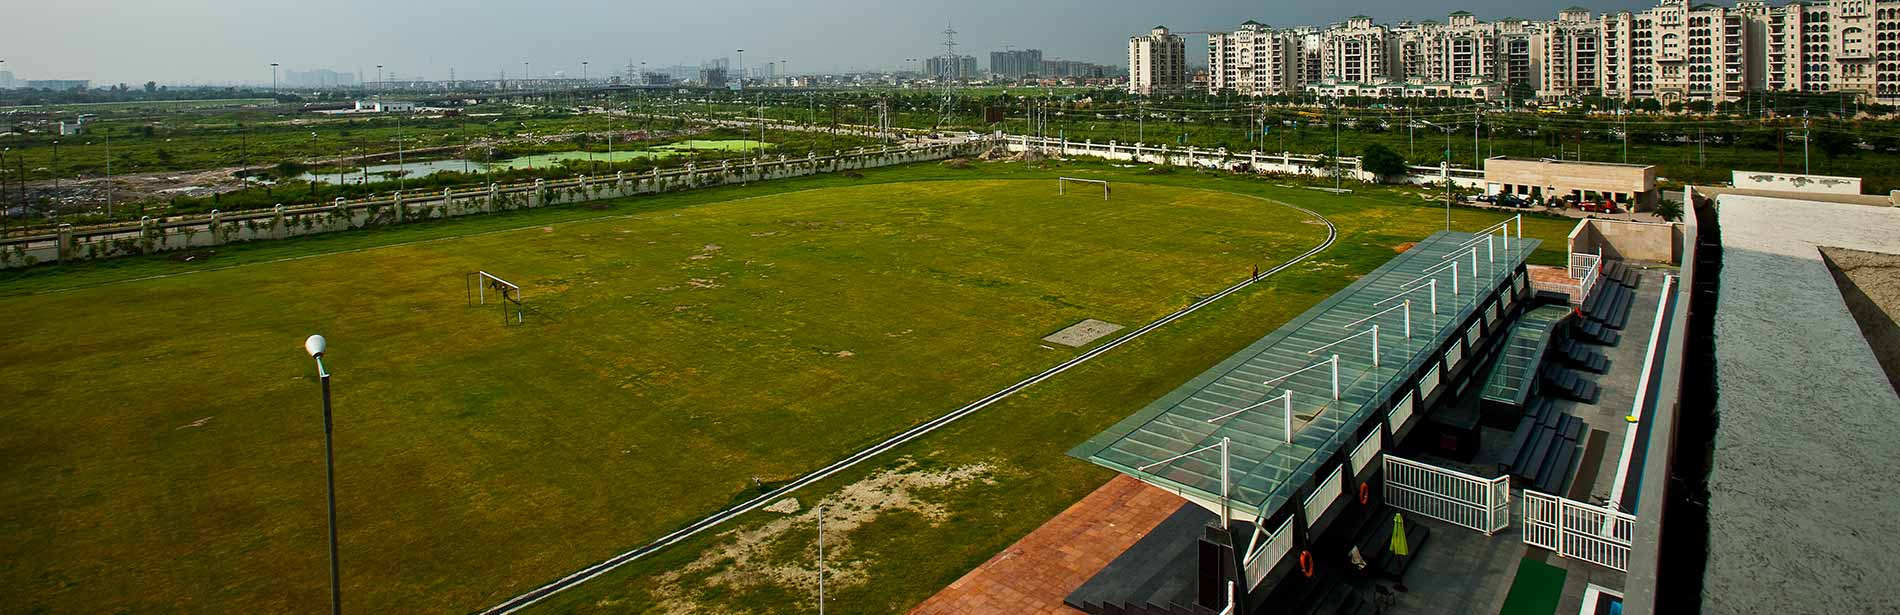 Full Size Football Field